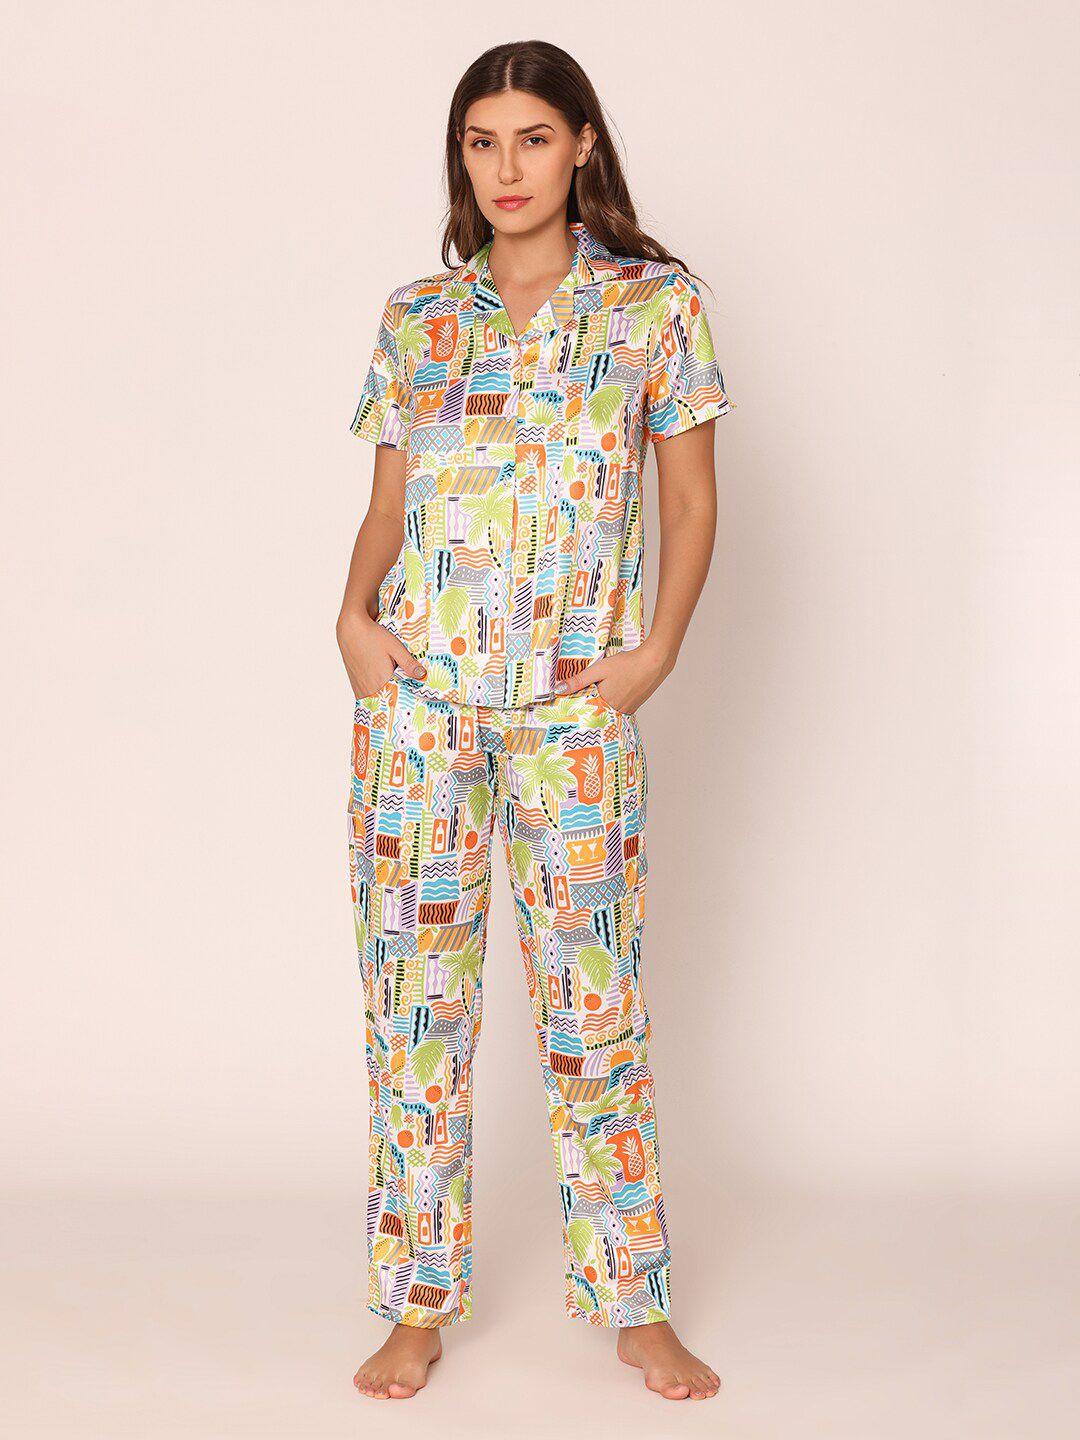 vami abstract printed satin shirt with pyjama night suit